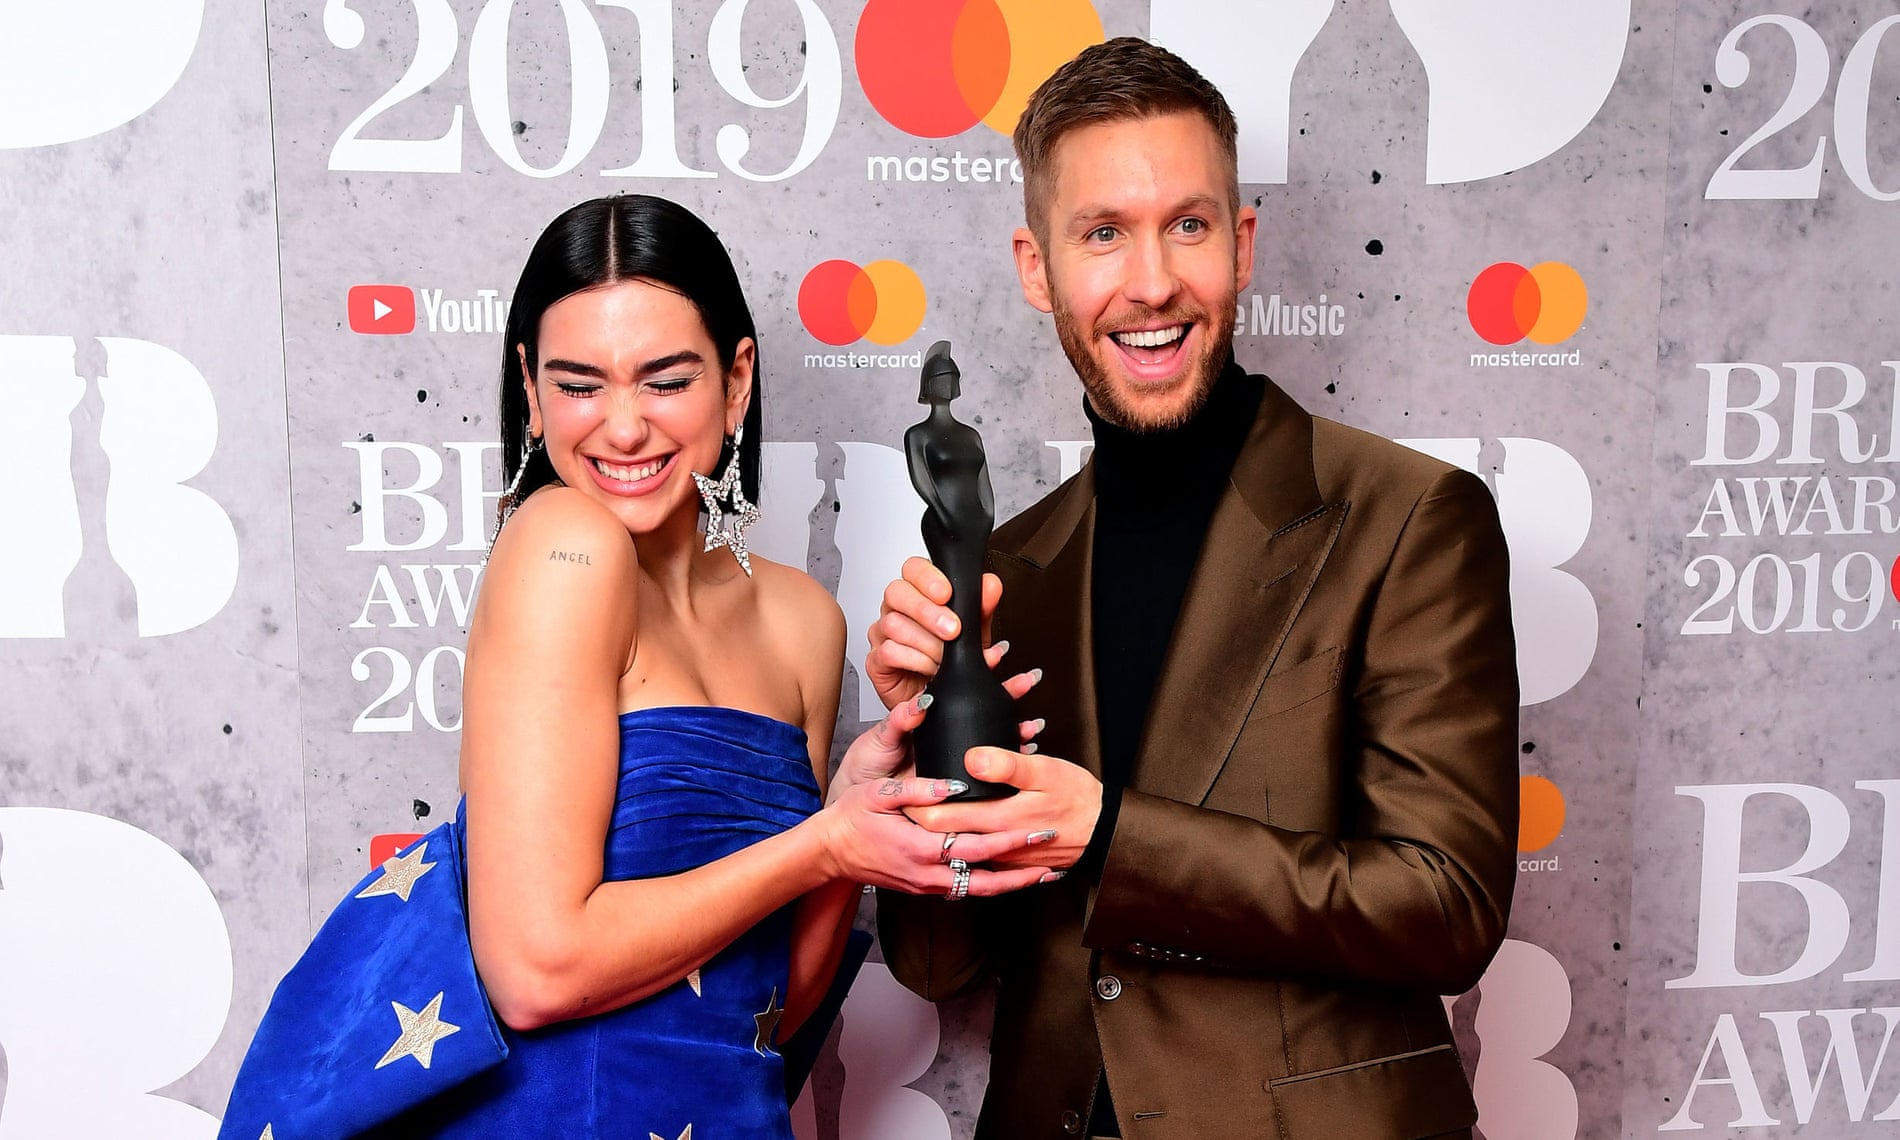 Metropolis Dominated The 2019 BRIT Awards